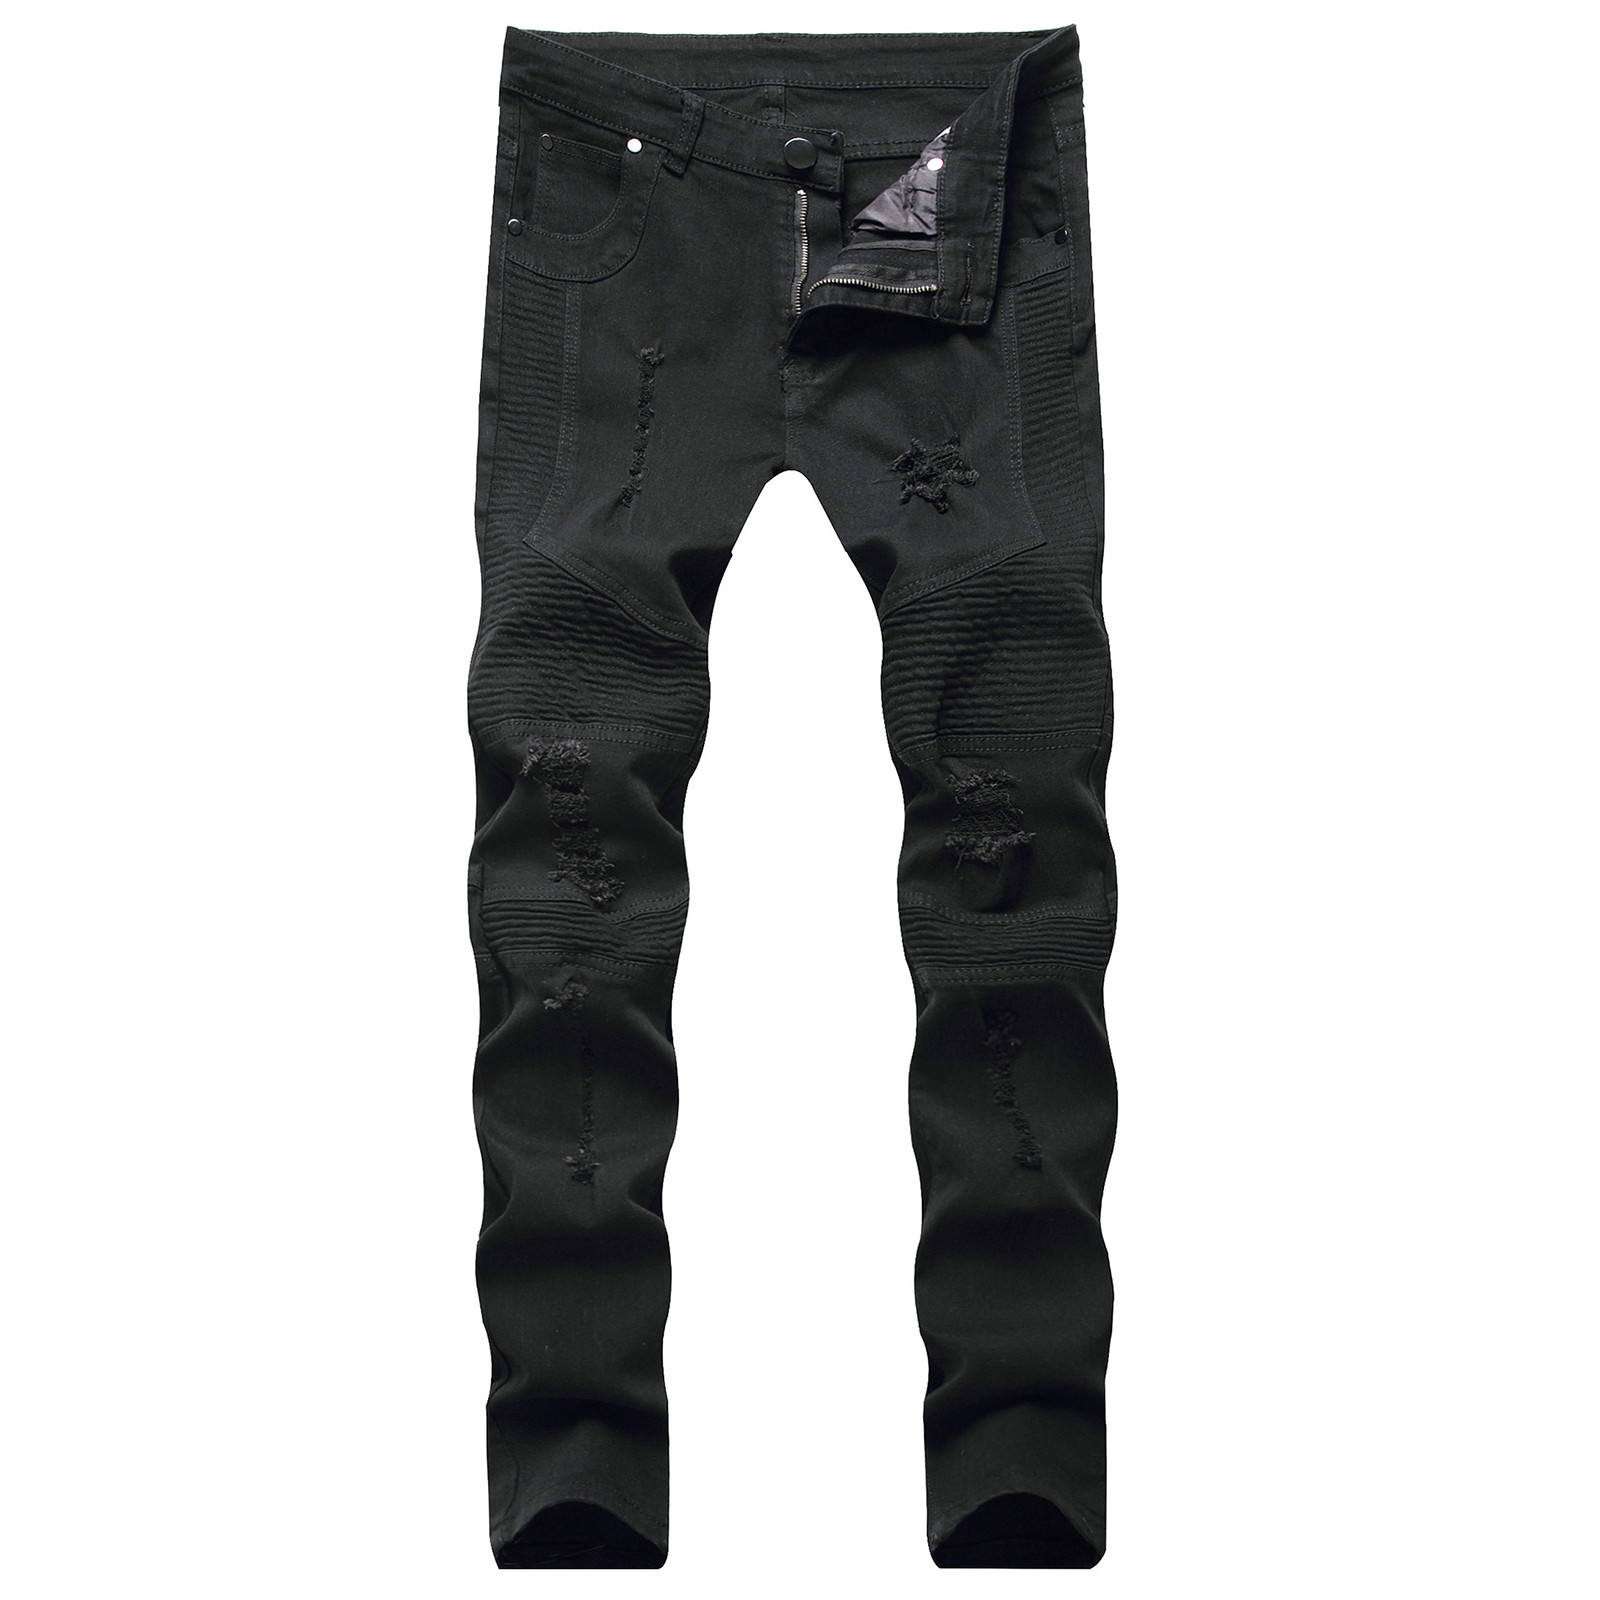 Jeans for Men's Plus Size Capri Trouser Hip-hop Ripped Motorcycle Denim Pant Slim Stretch Leg Pencil Pants - image 1 of 3